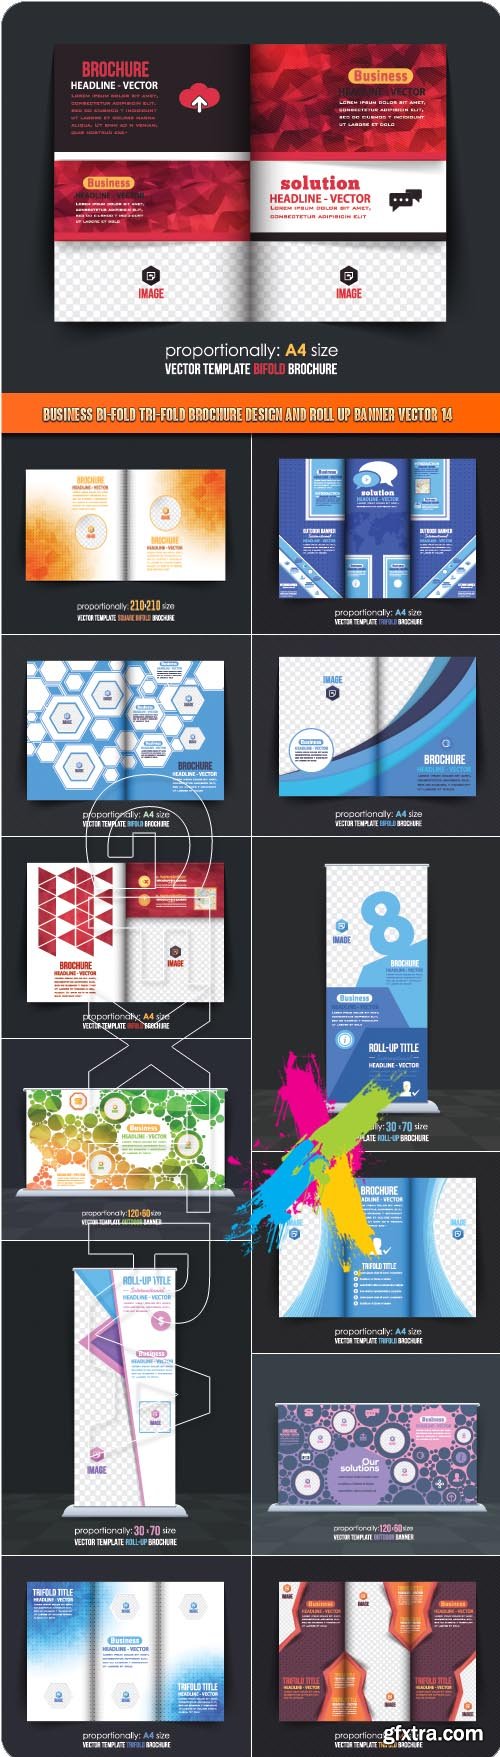 Business Bi-Fold Tri-Fold Brochure Design and Roll up banner vector 14